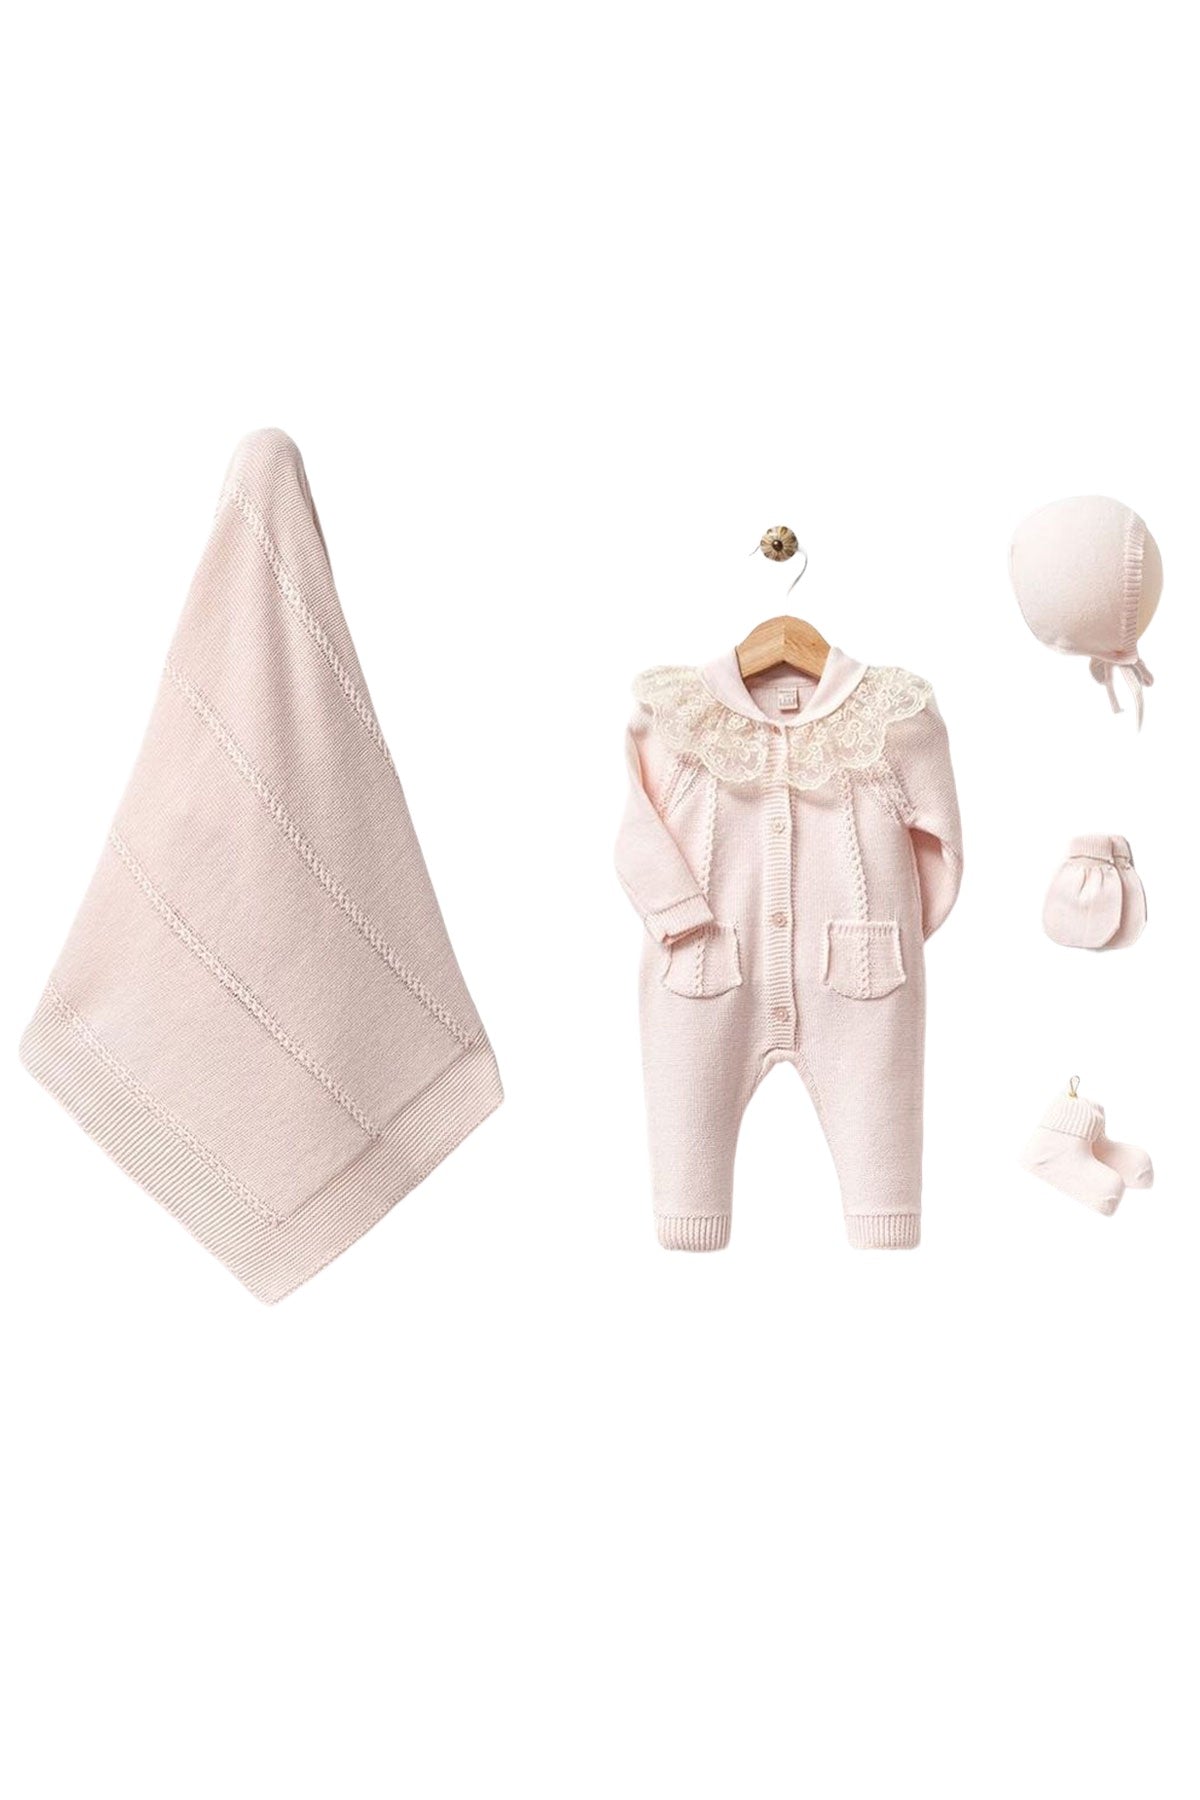 Adrian Pink Knit Newborn Coming Home Set (5 Pcs)